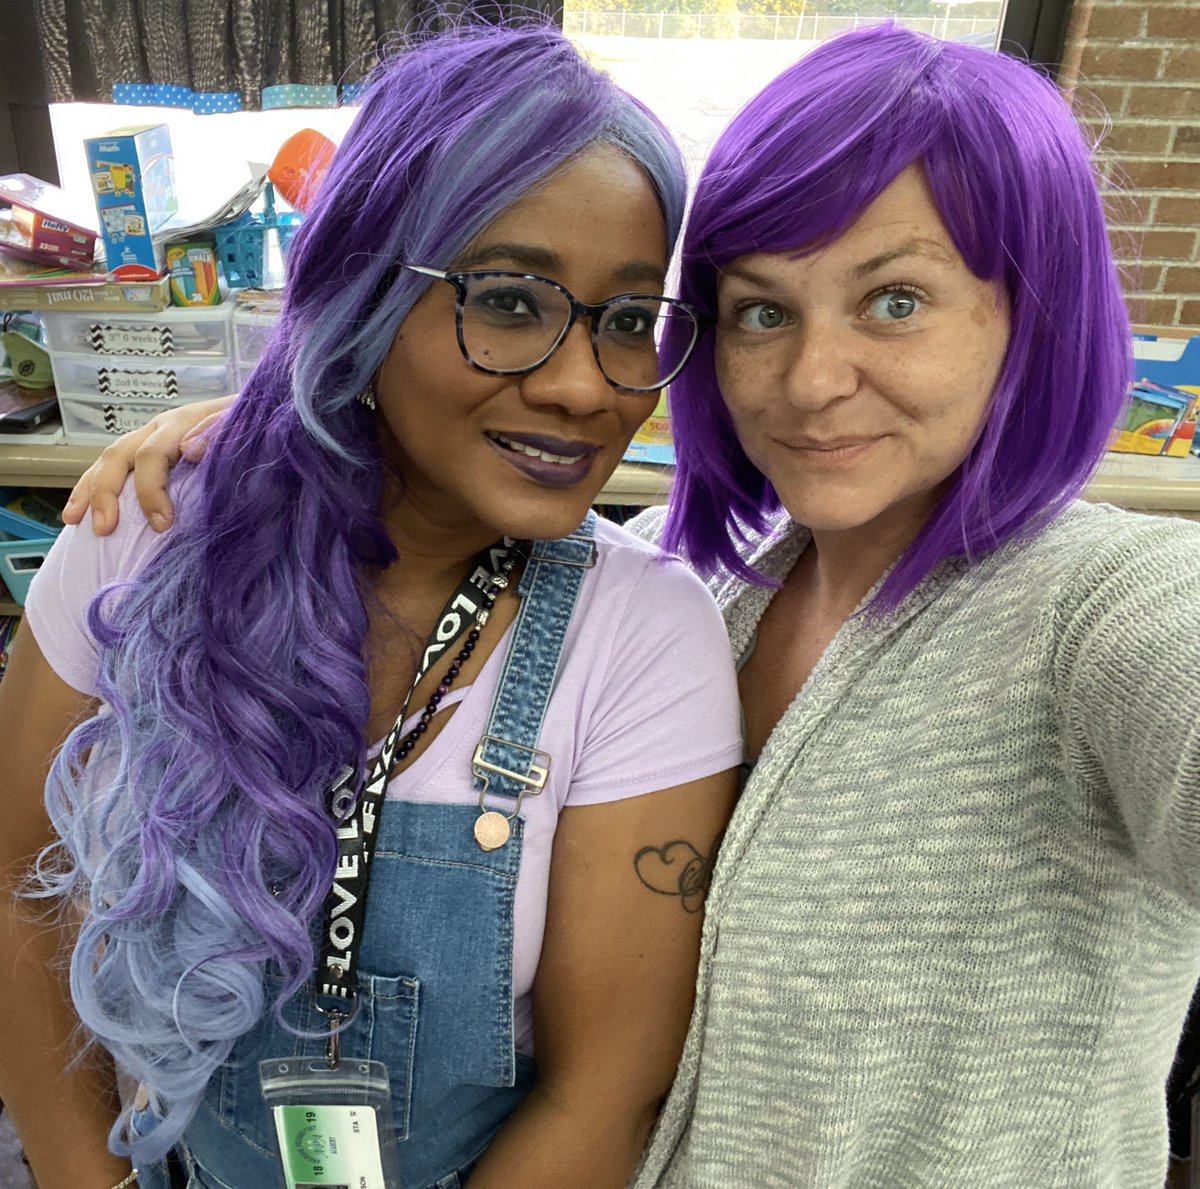 Homecoming, purple day!! #teacherfriends #HOCO #schoolspirit #teacherpositivity